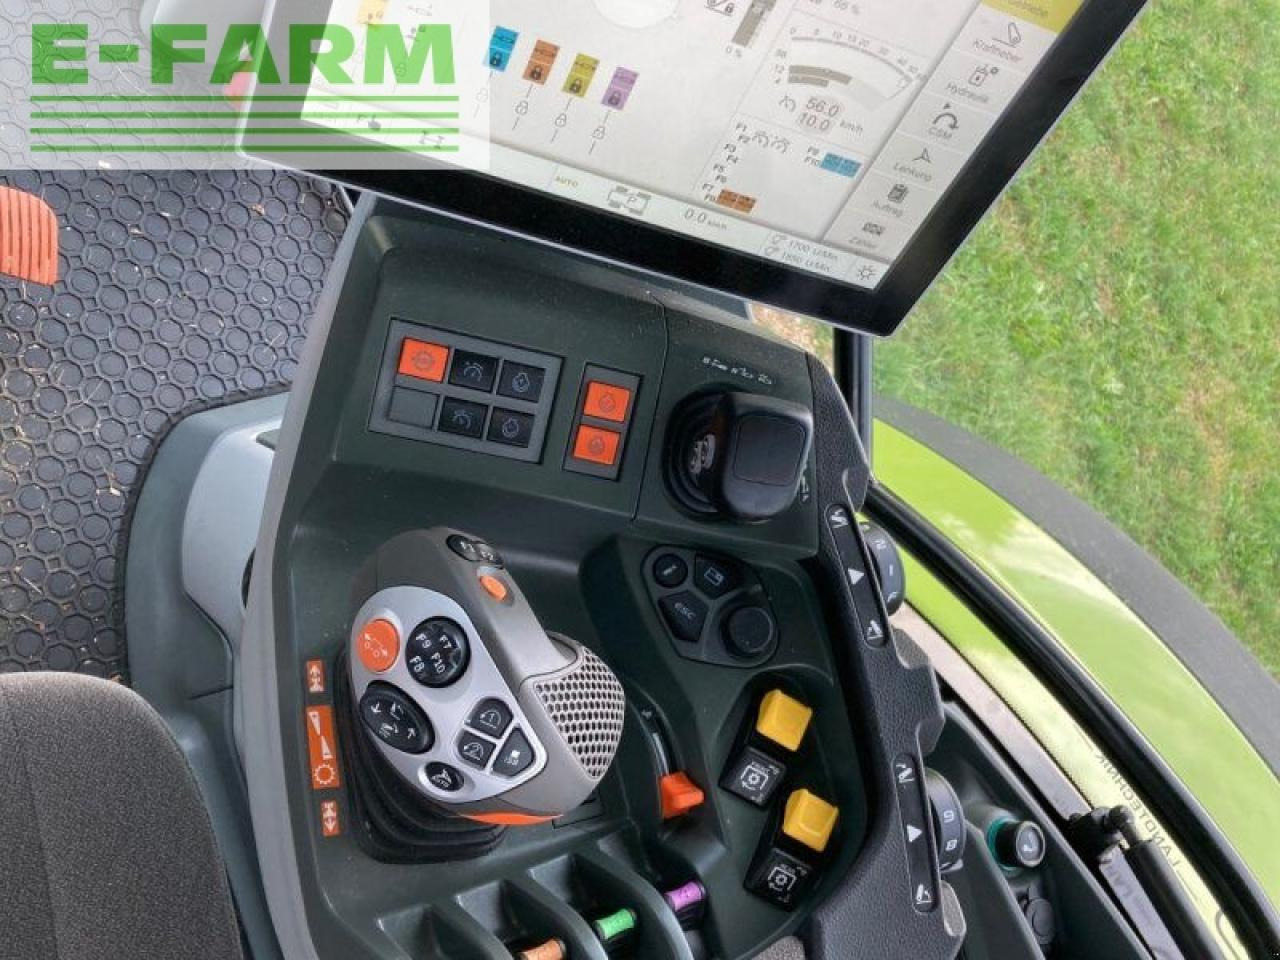 Farm tractor CLAAS arion 550 cmatic